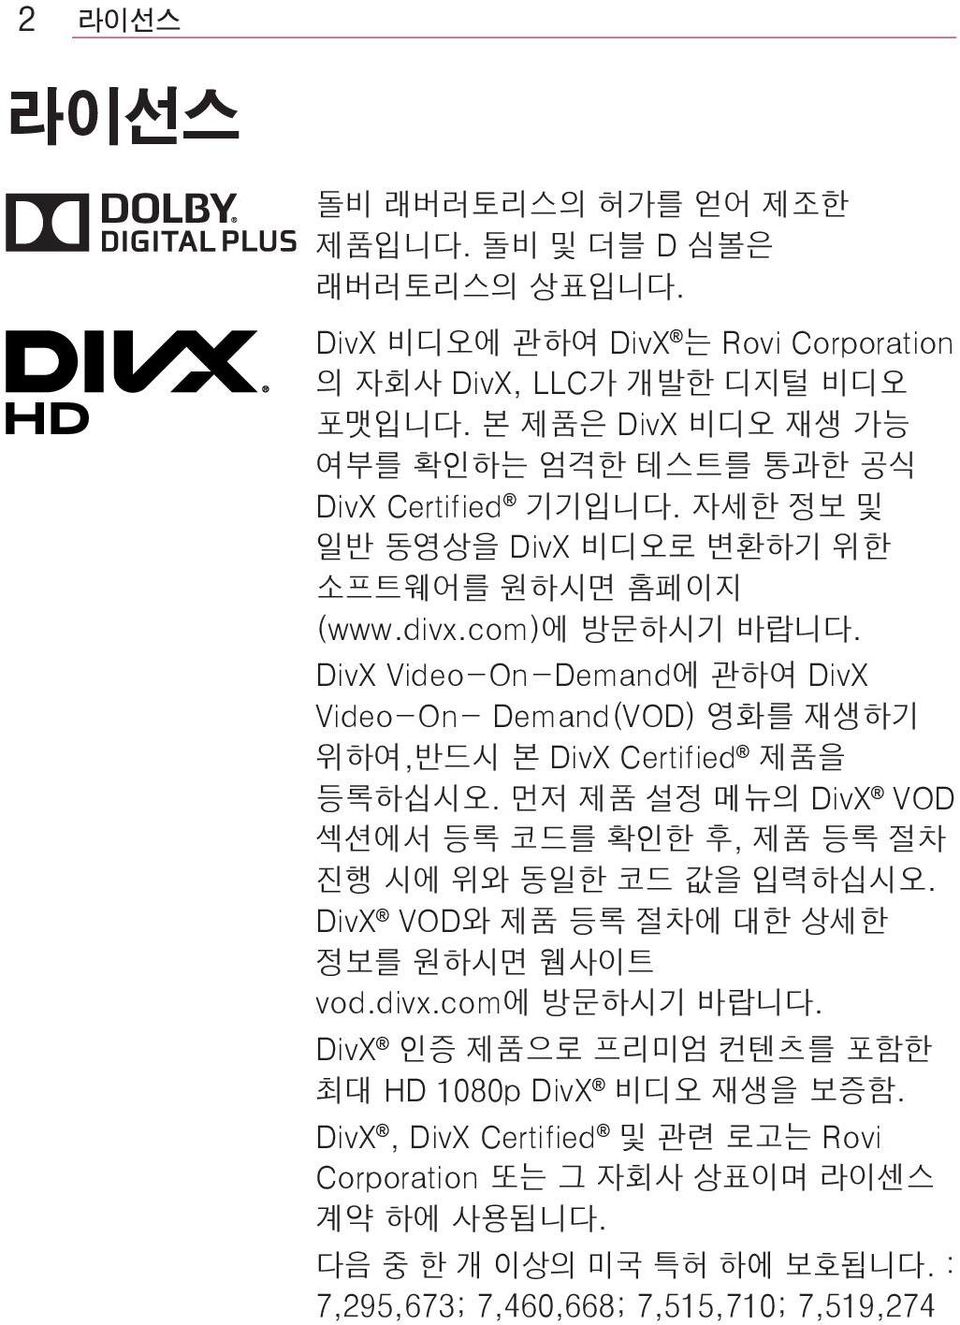 DivX Video-On-Demand에 관하여 DivX Video-On- Demand(VOD) 영화를 재생하기 위하여,반드시 본 DivX Certified 제품을 등록하십시오. 먼저 제품 설정 메뉴의 DivX VOD 섹션에서 등록 코드를 확인한 후, 제품 등록 절차 진행 시에 위와 동일한 코드 값을 입력하십시오.